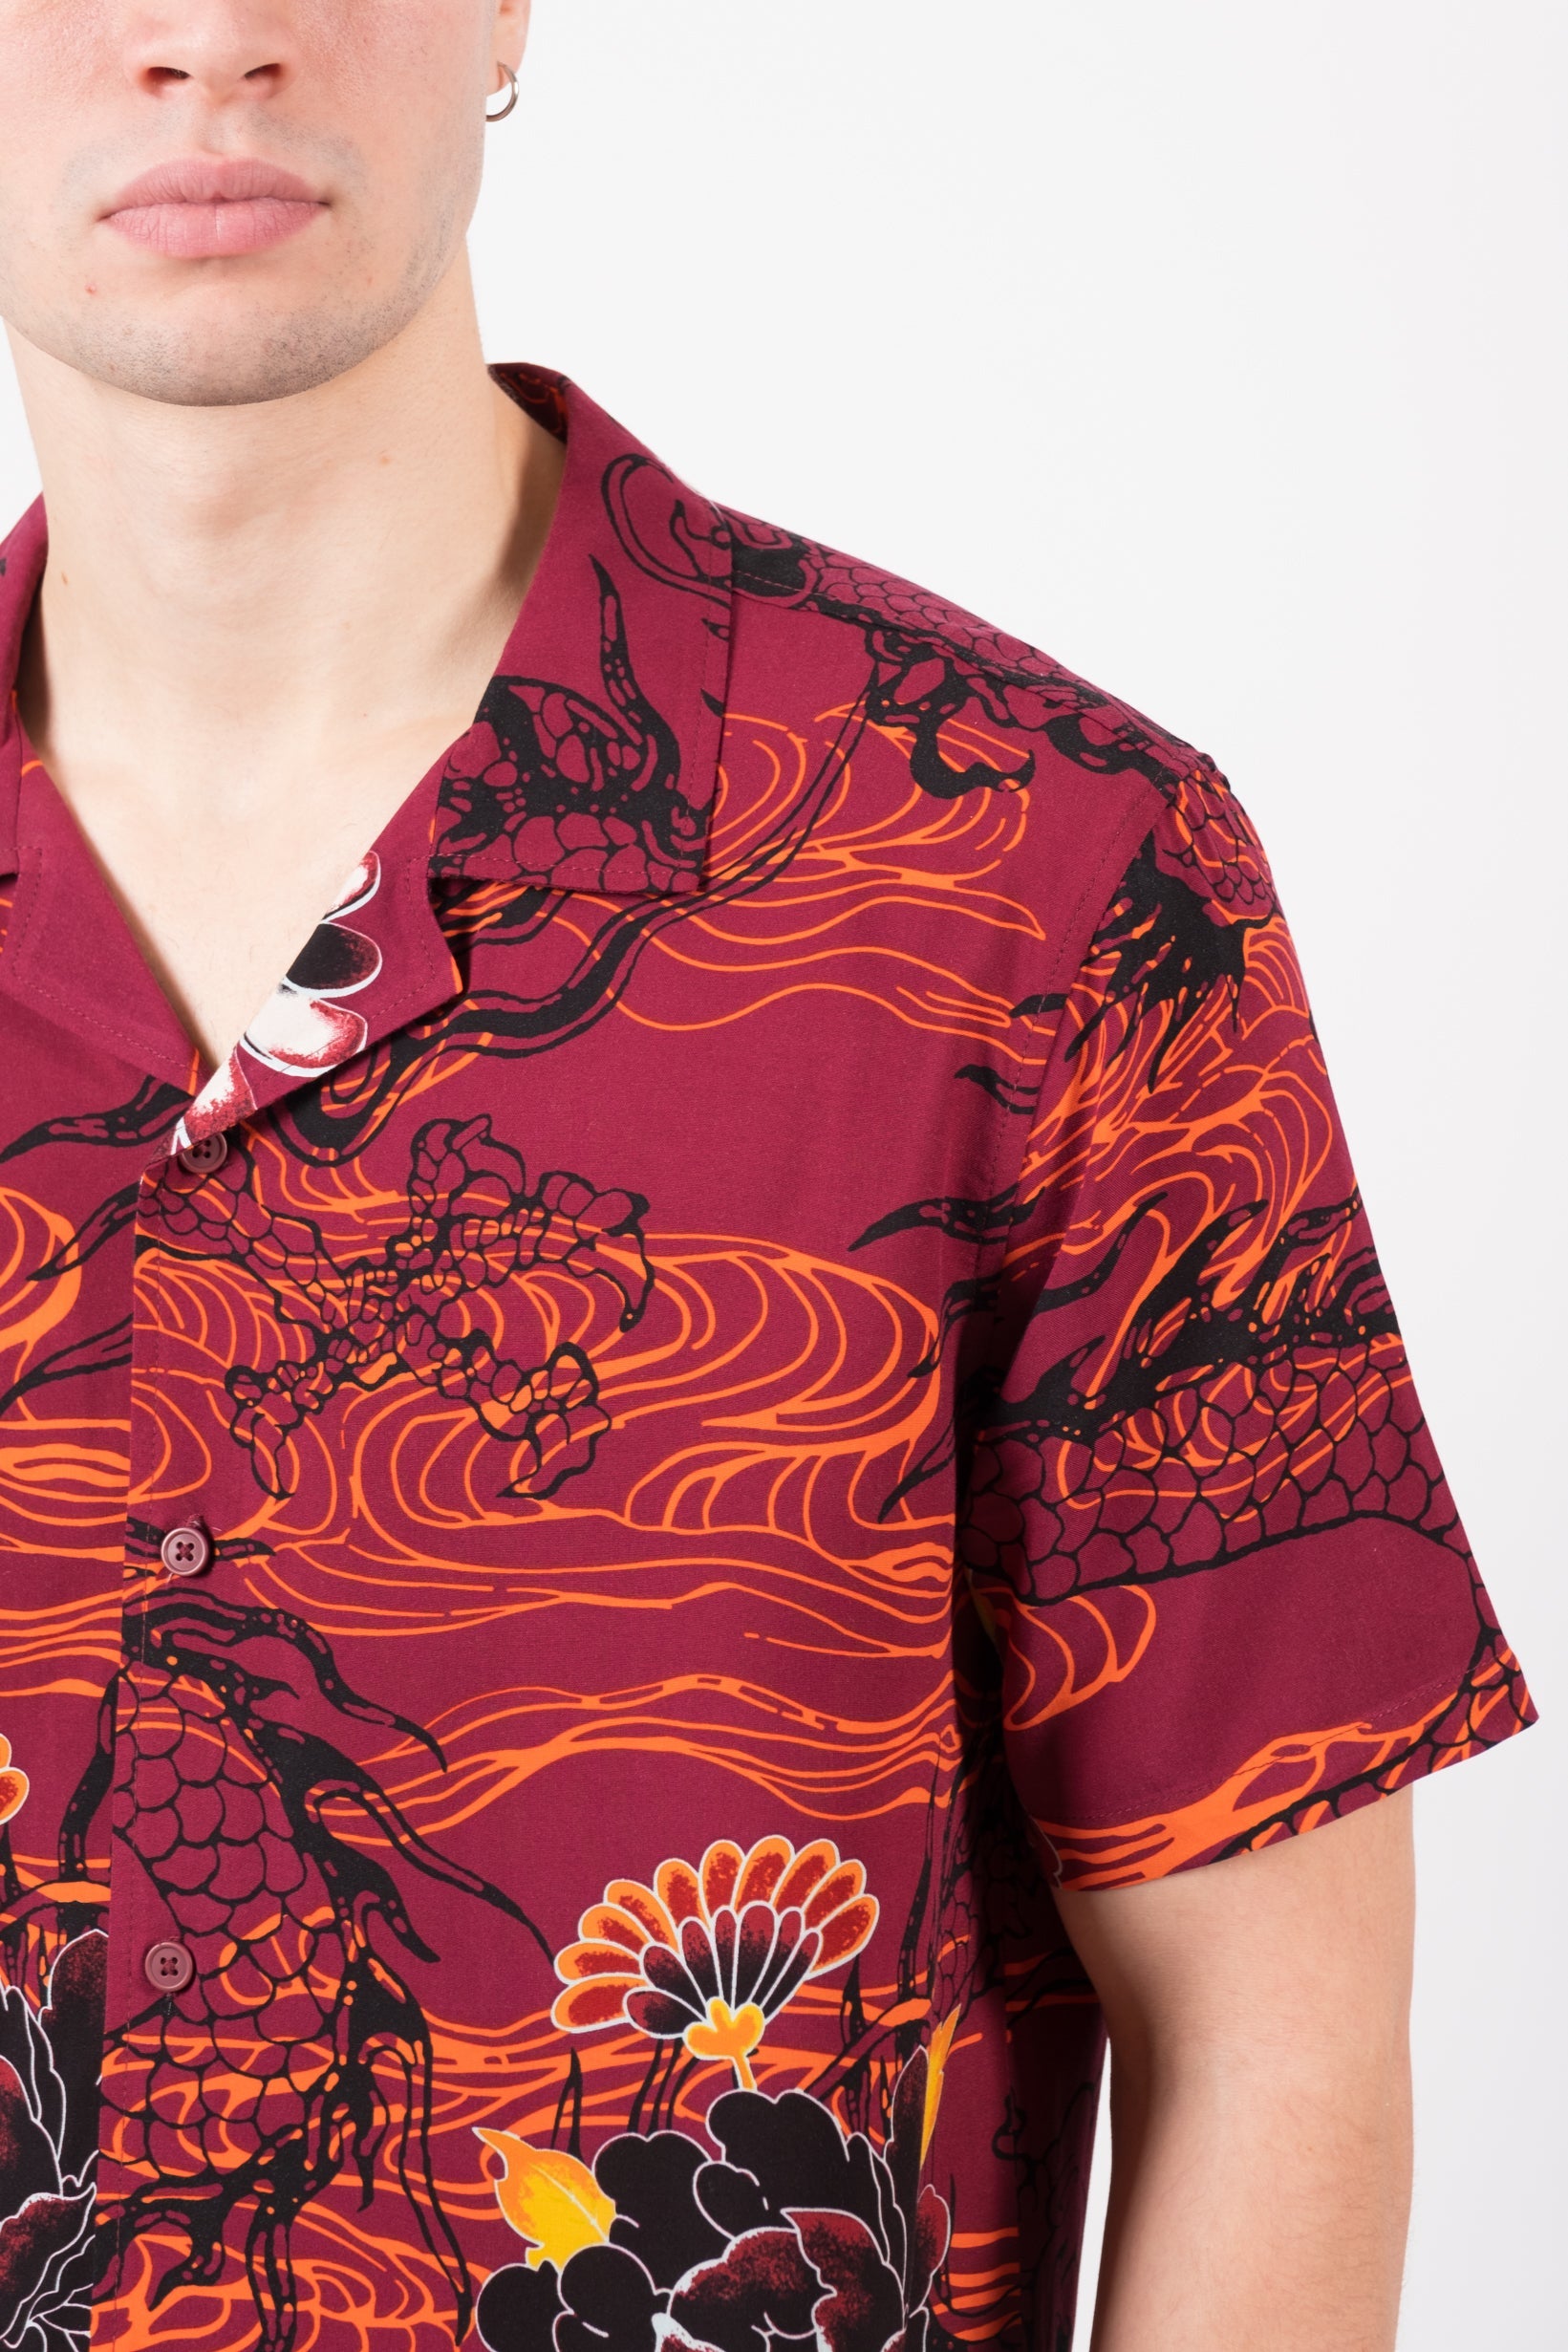 Brushed Florals Rayon Shirt |Men's Tops | Brooklyn Cloth